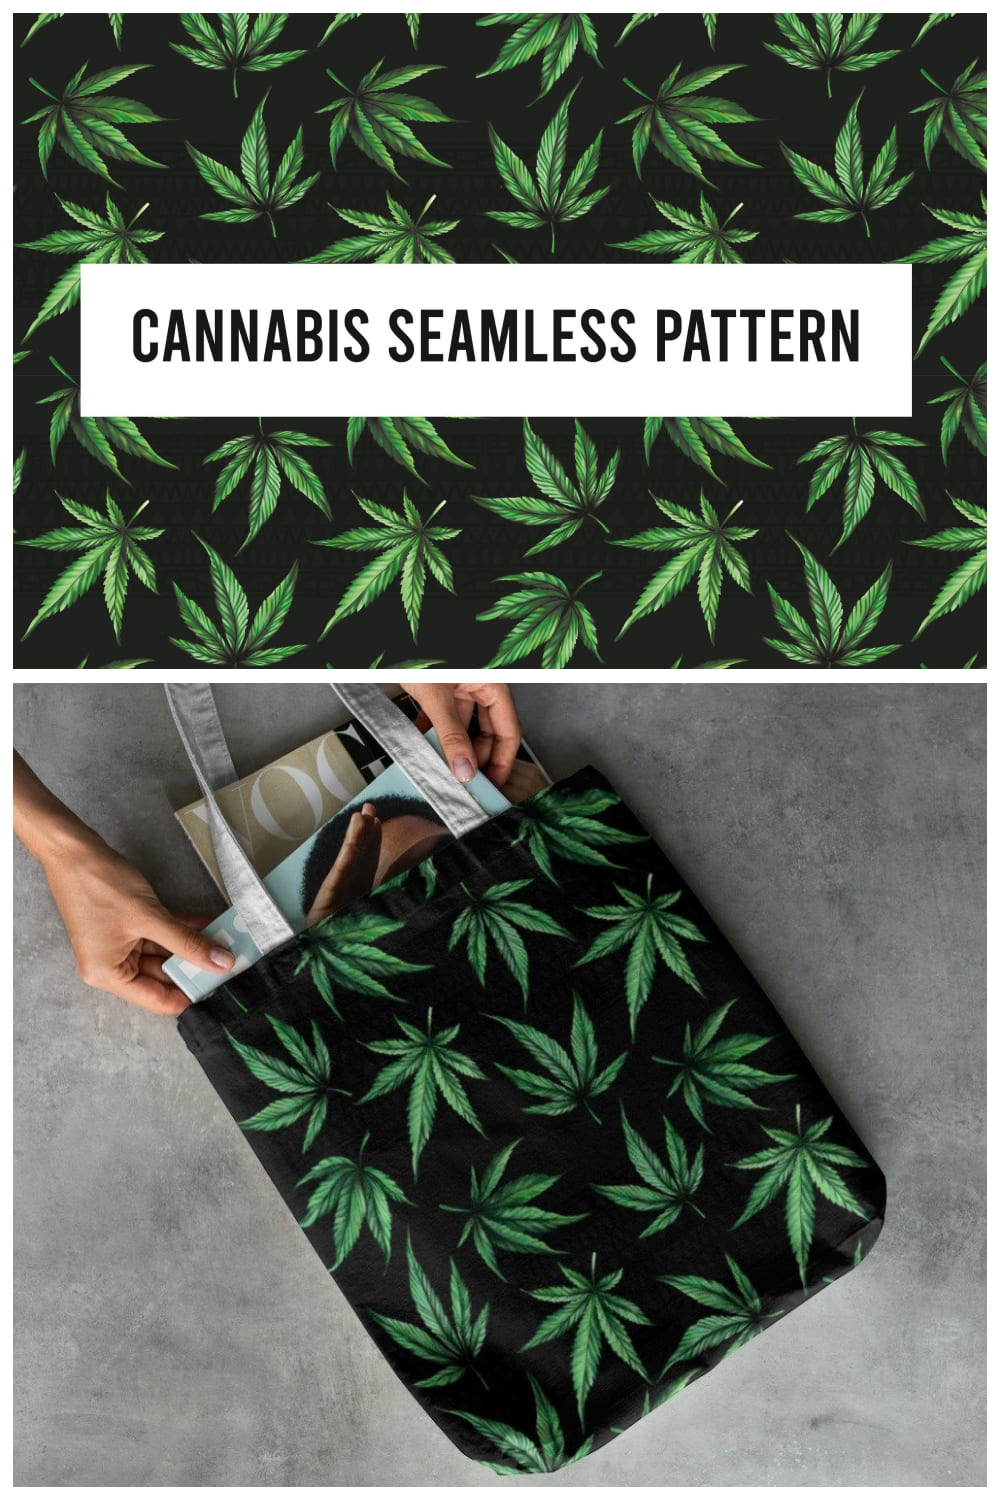 Marijuana pattern - pinterest image preview.